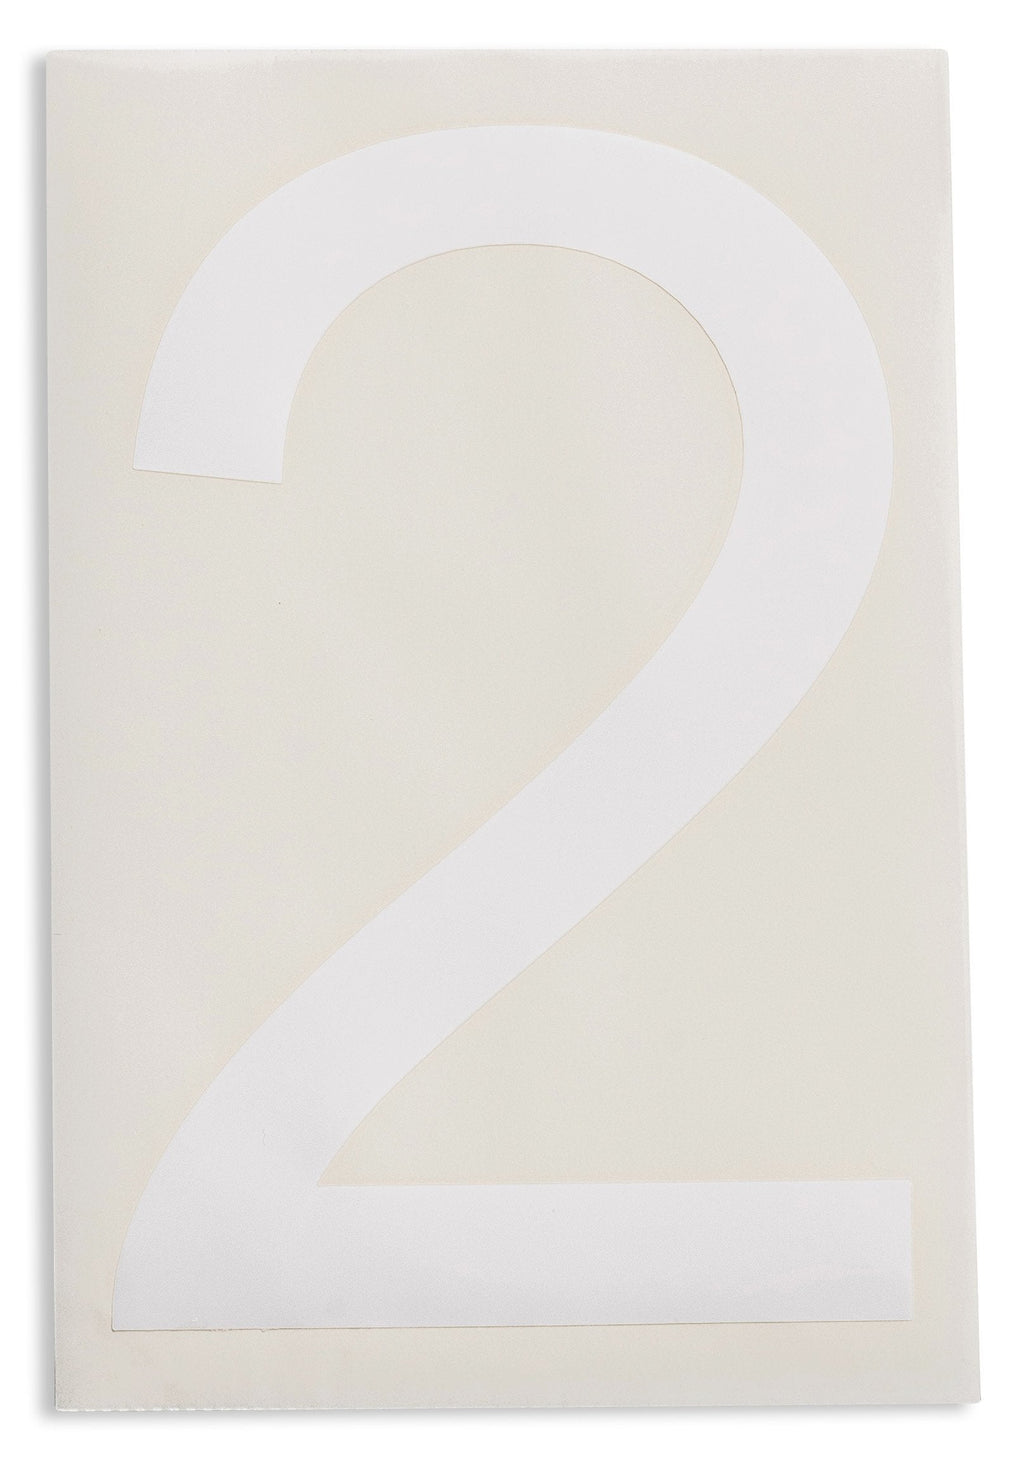  [AUSTRALIA] - Brady 121860 ToughStripe Die-Cut Polyester Tape, White Letter"2"(Pack of 20)